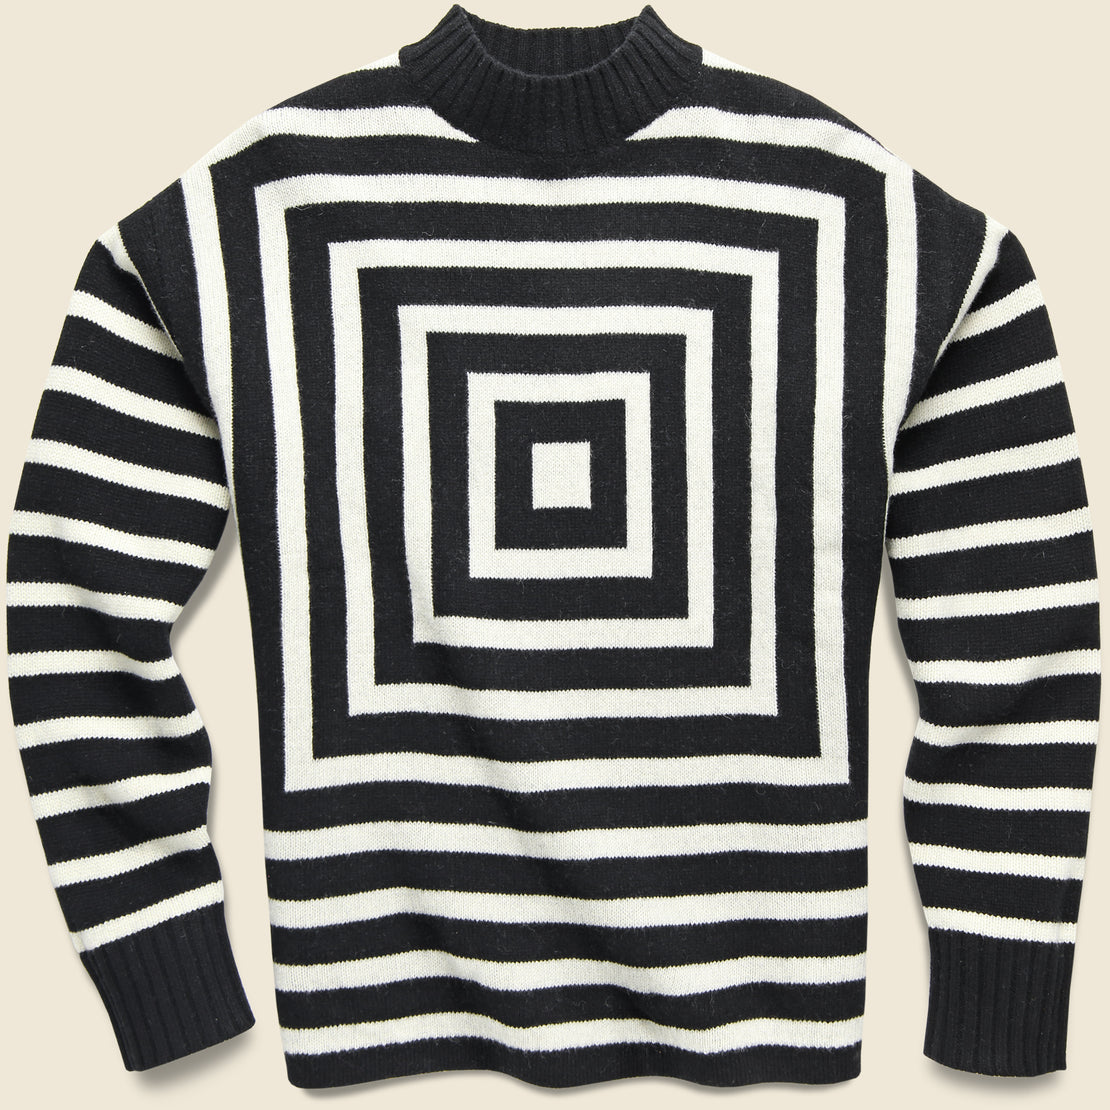 Levis Vintage Clothing Concentric Squares Mock Neck Sweater - Black/White